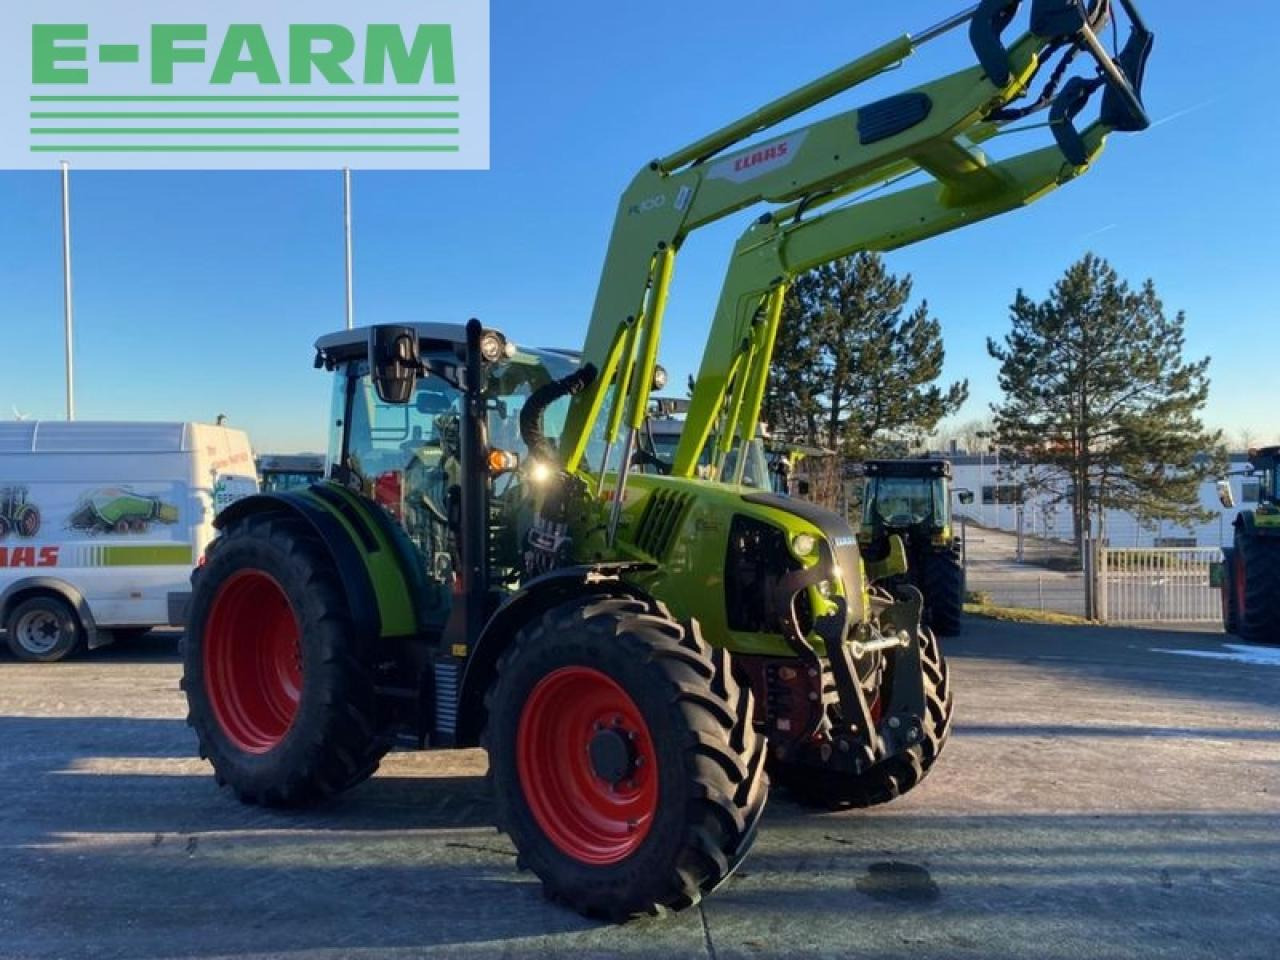 Farm tractor CLAAS arion 420 cis mit fl 100